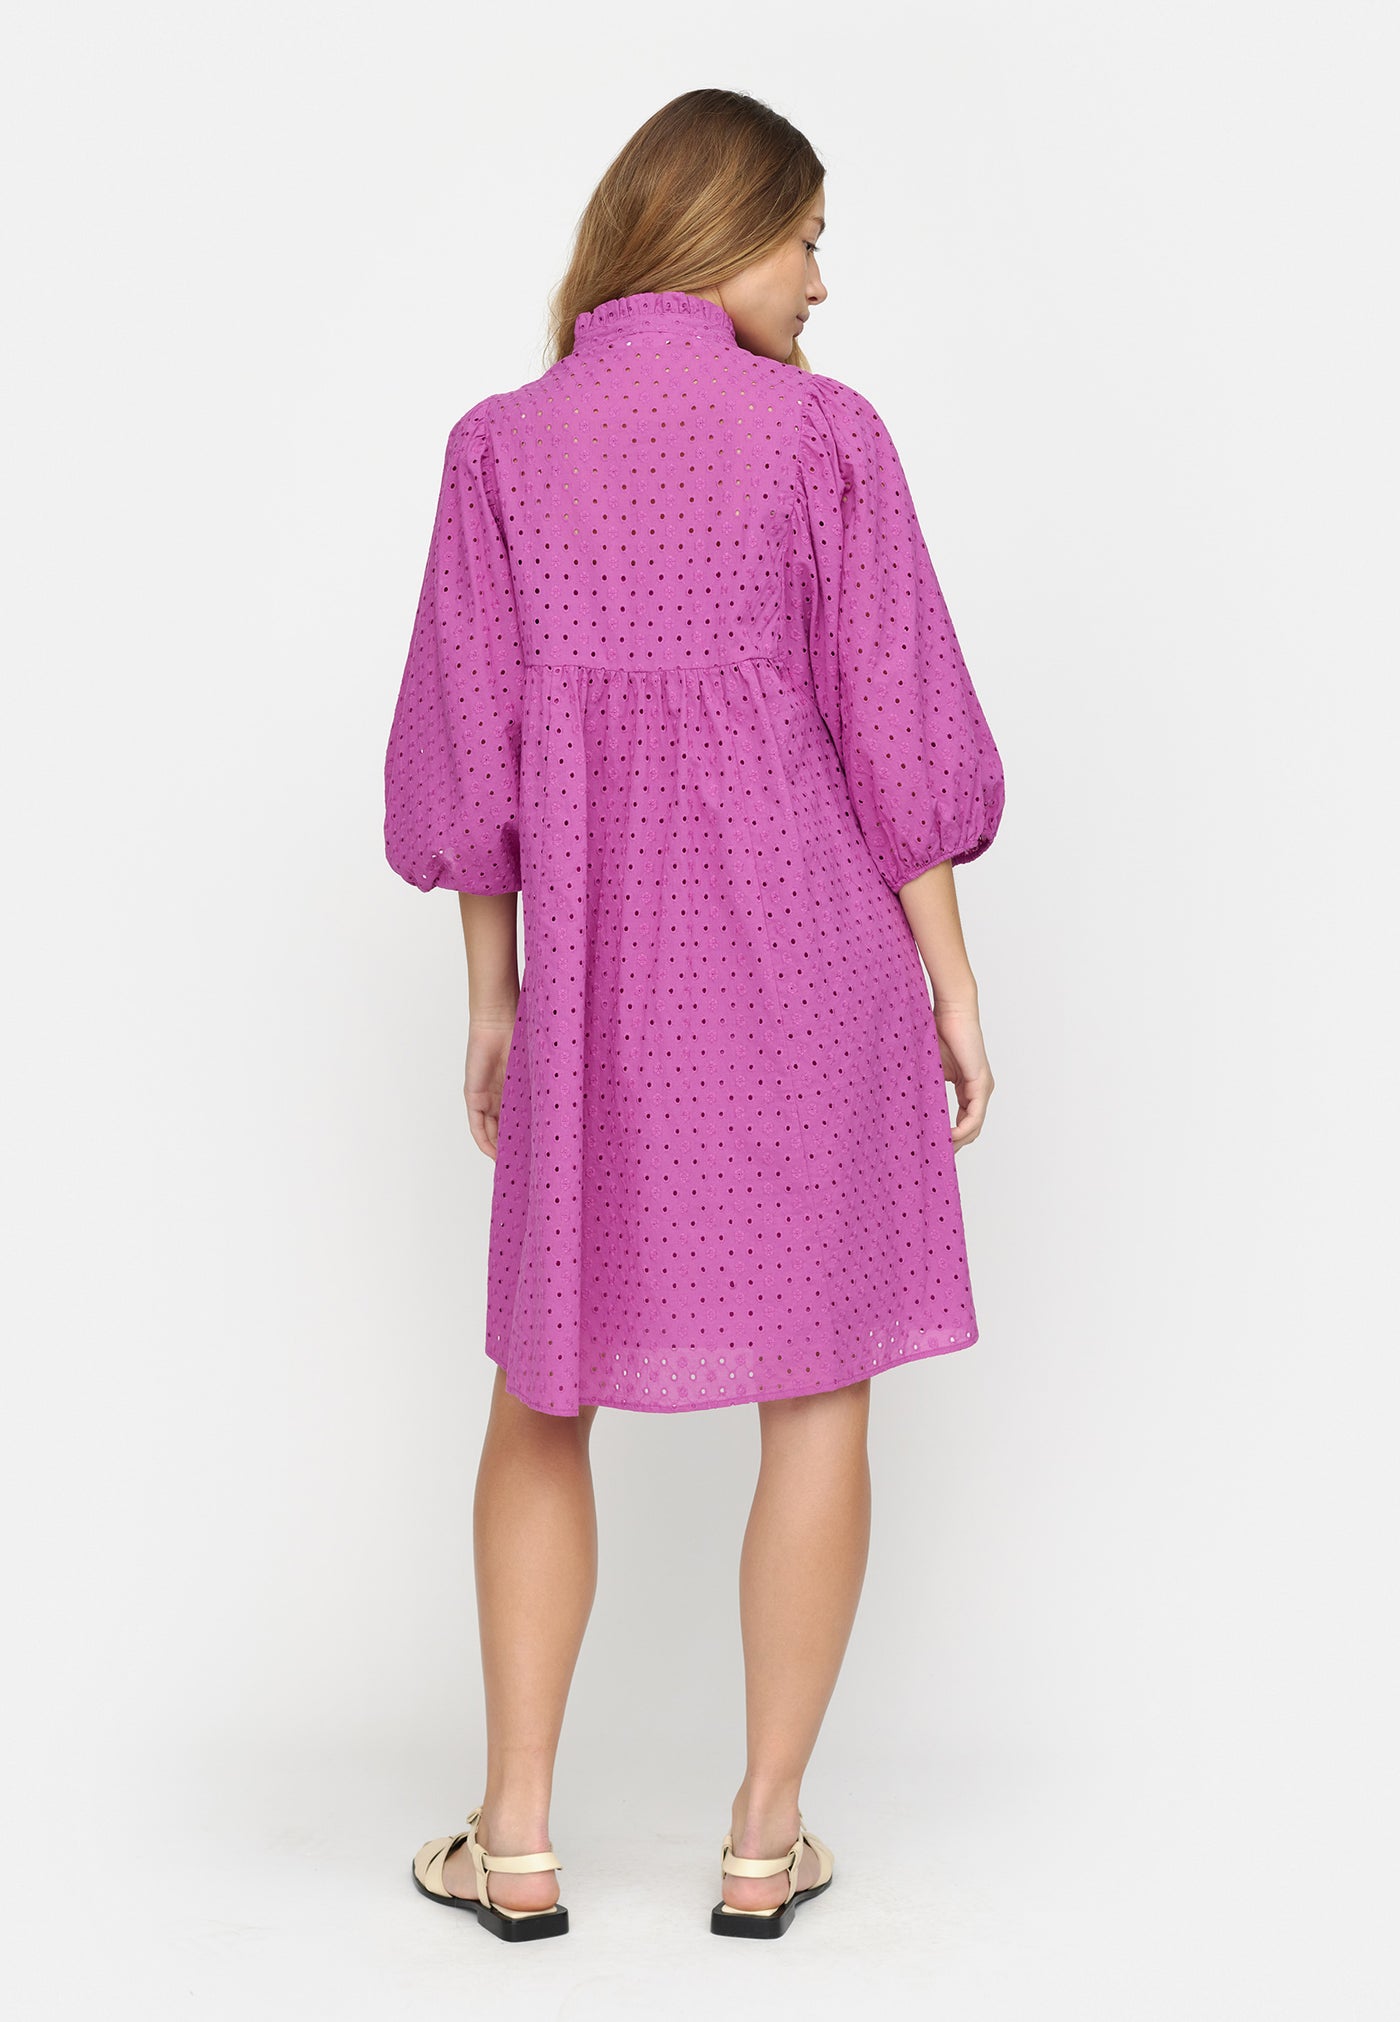 Soft Rebels  SRMarine Dress Dresses & jumpsuits 462 Purple Orchid